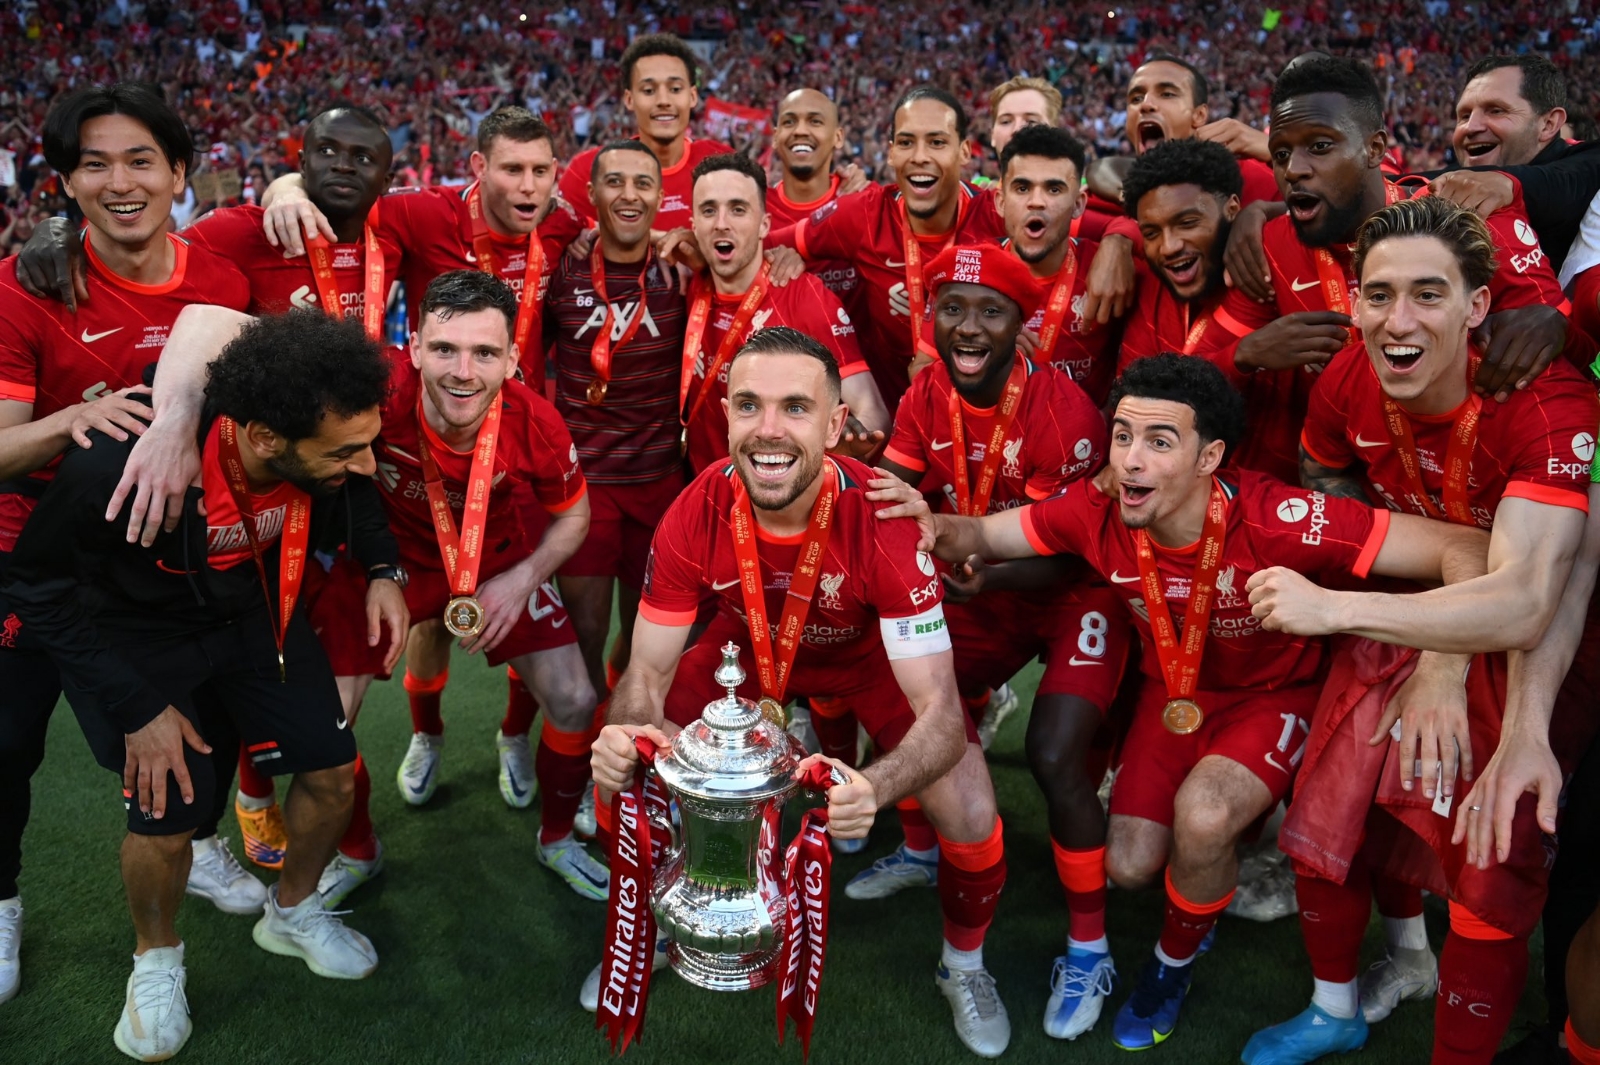 Liverpool conquista su octava FA Cup al vencer al Chelsea en Wembley